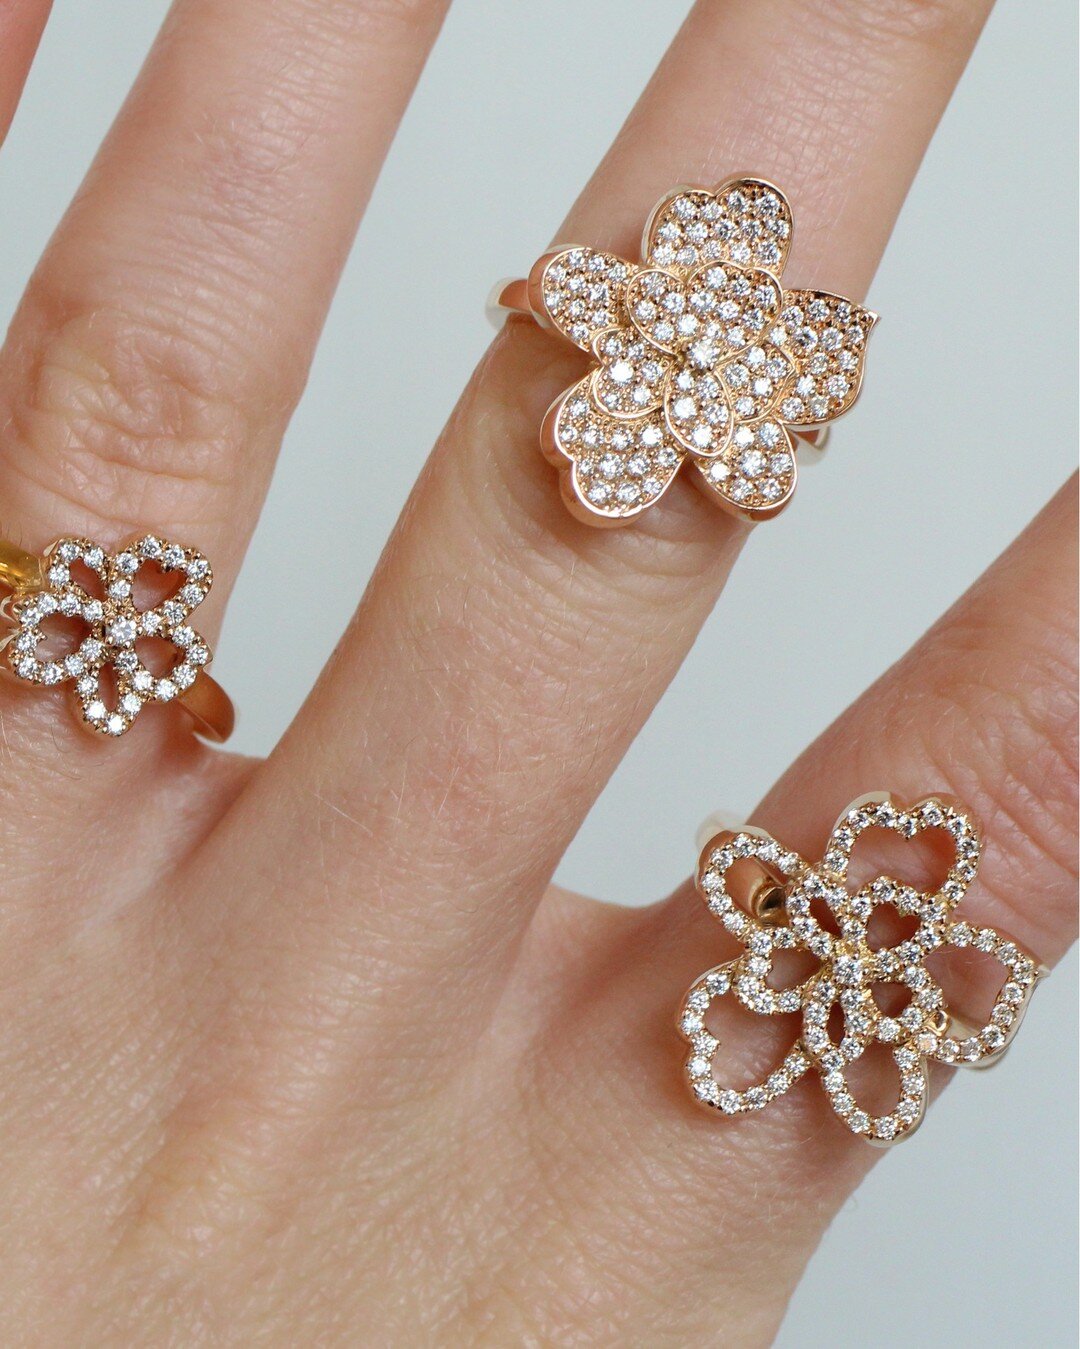 18-carat rose gold and diamonds ✨

#SutcliffeRosaAdorata